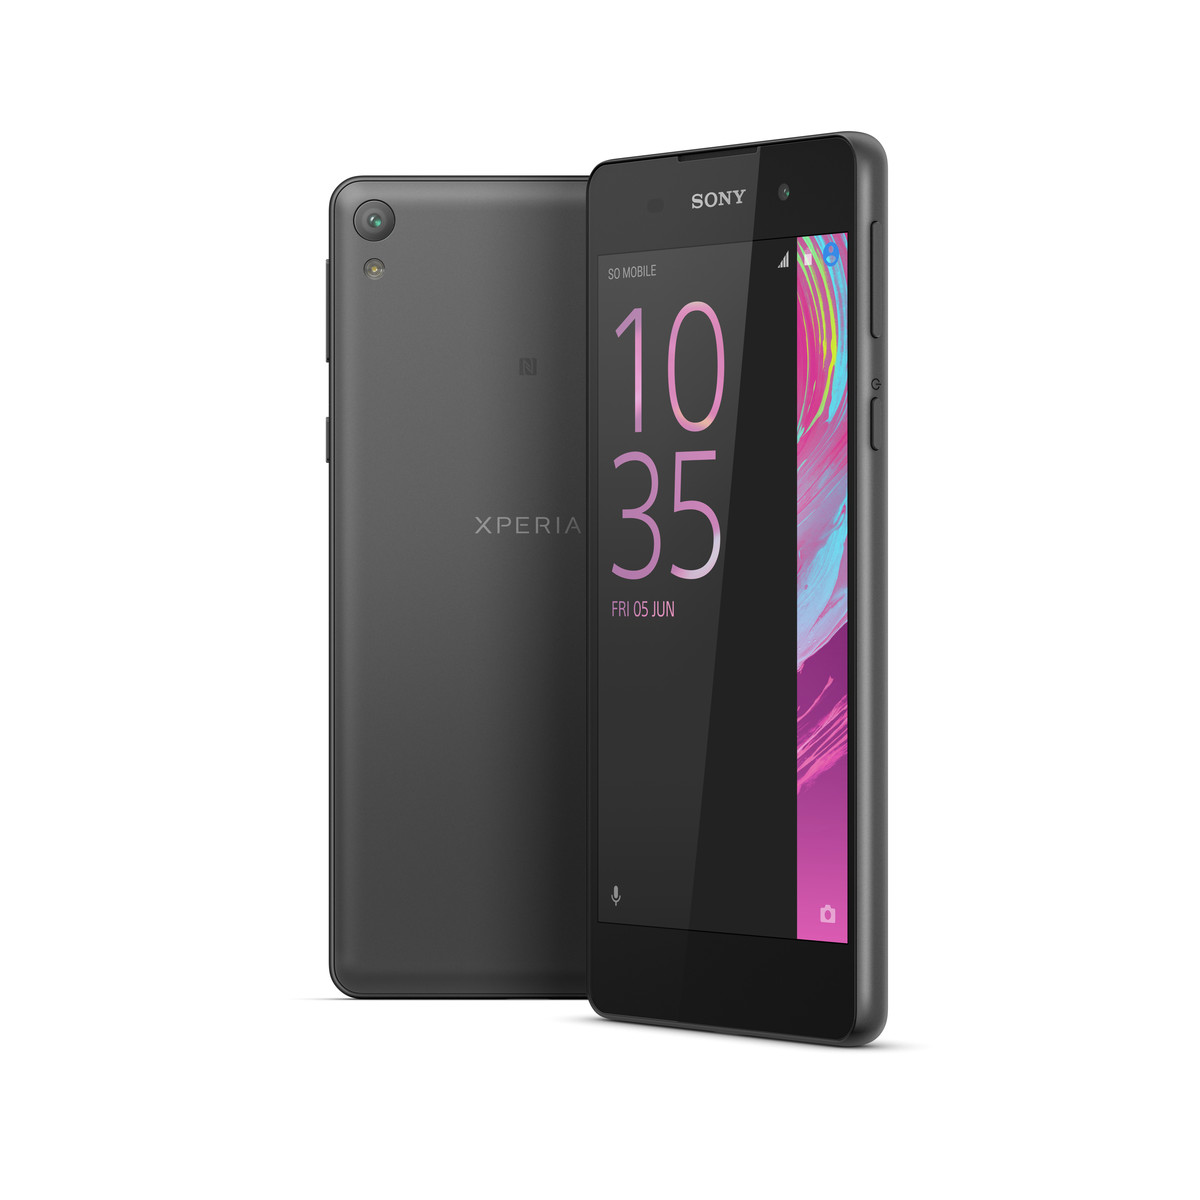 voelen Asser eindpunt Sony Xperia E5 Smartphone Review - NotebookCheck.net Reviews